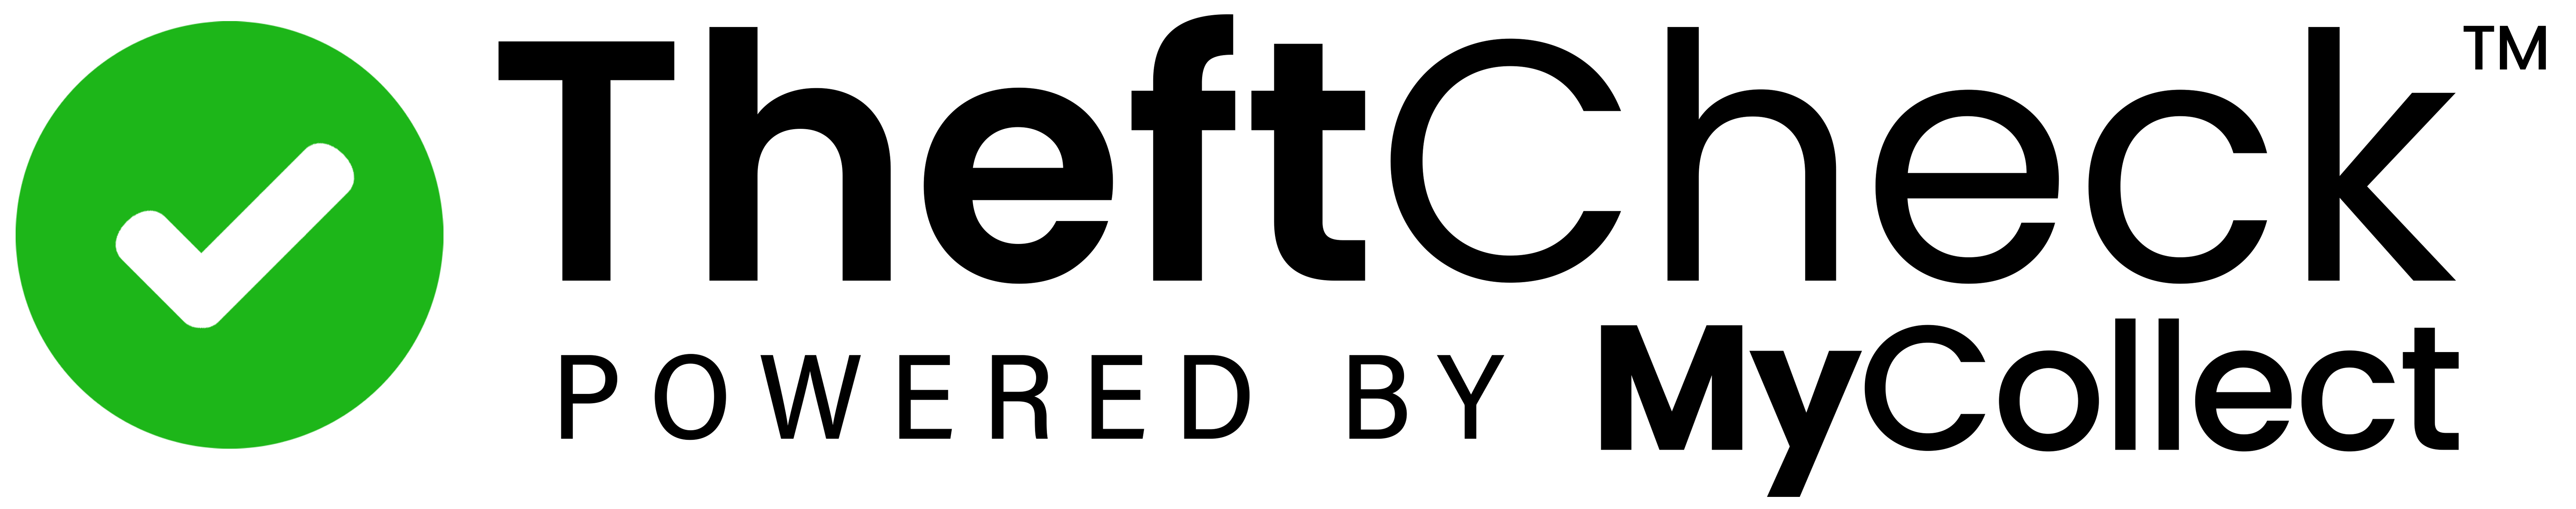 TheftCheck Logo